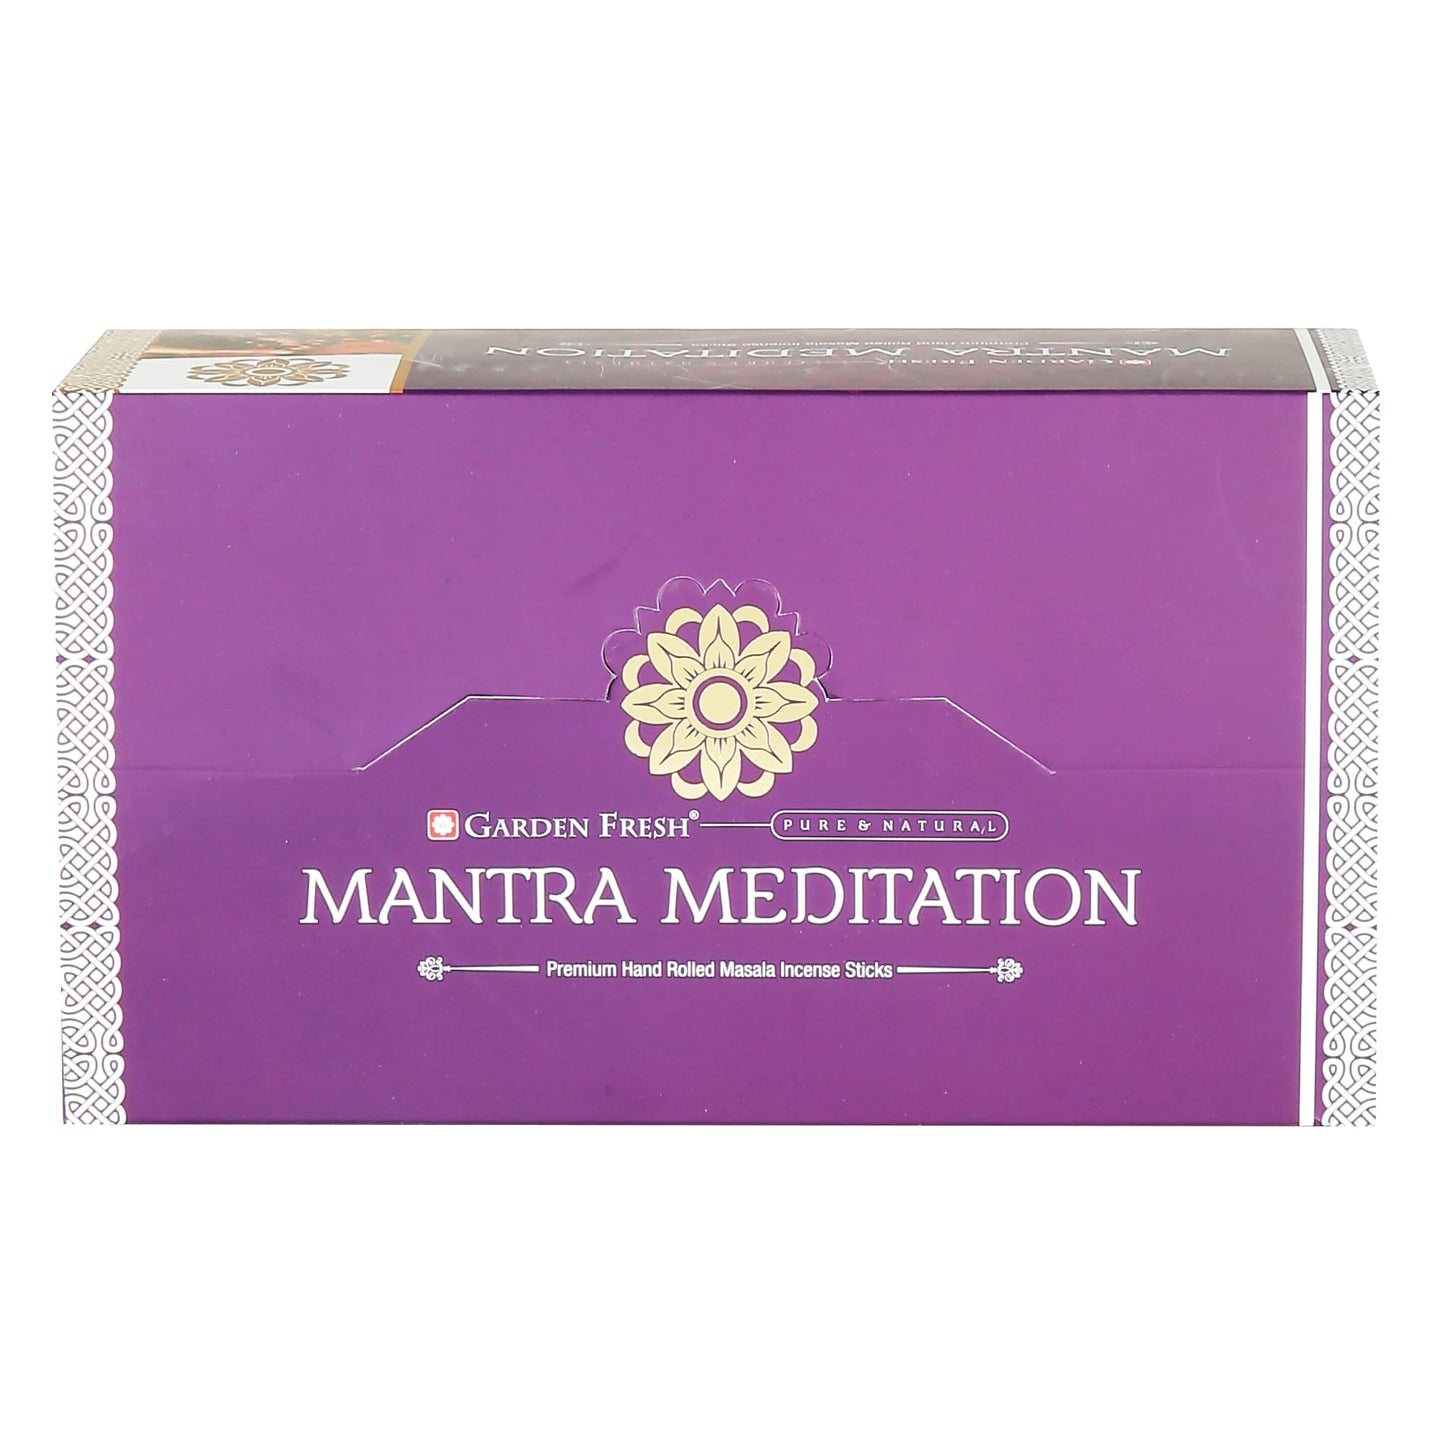 Mantra Meditation masala incense sticks